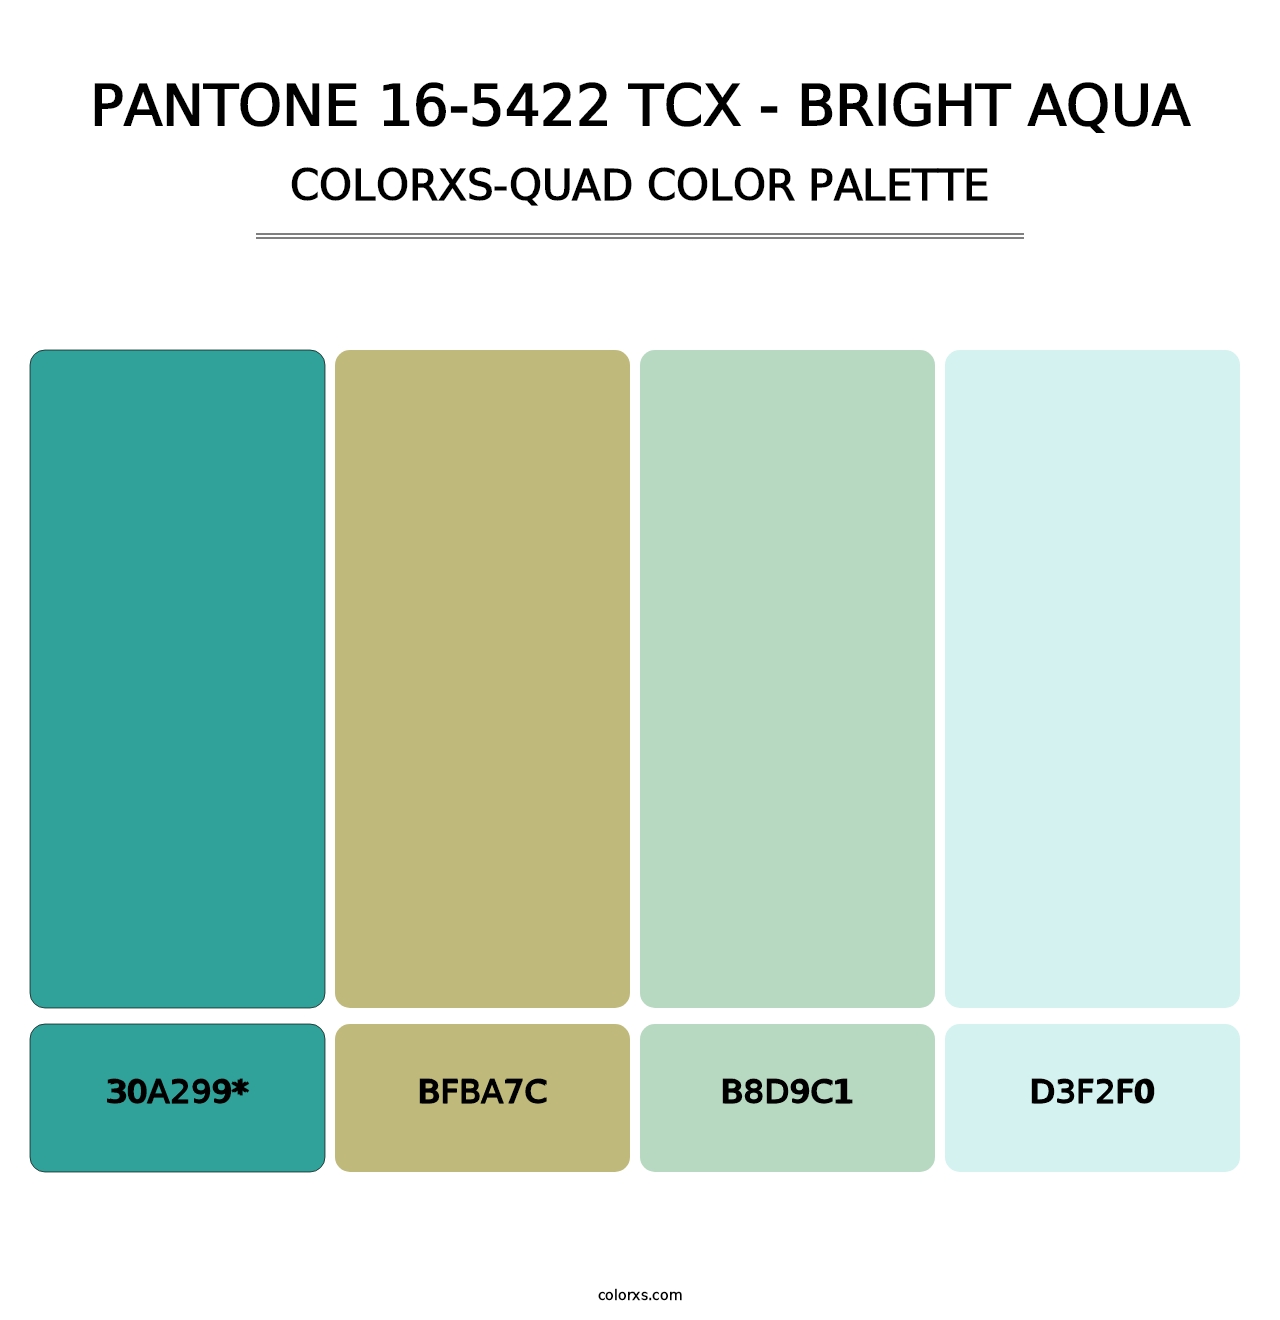 PANTONE 16-5422 TCX - Bright Aqua - Colorxs Quad Palette